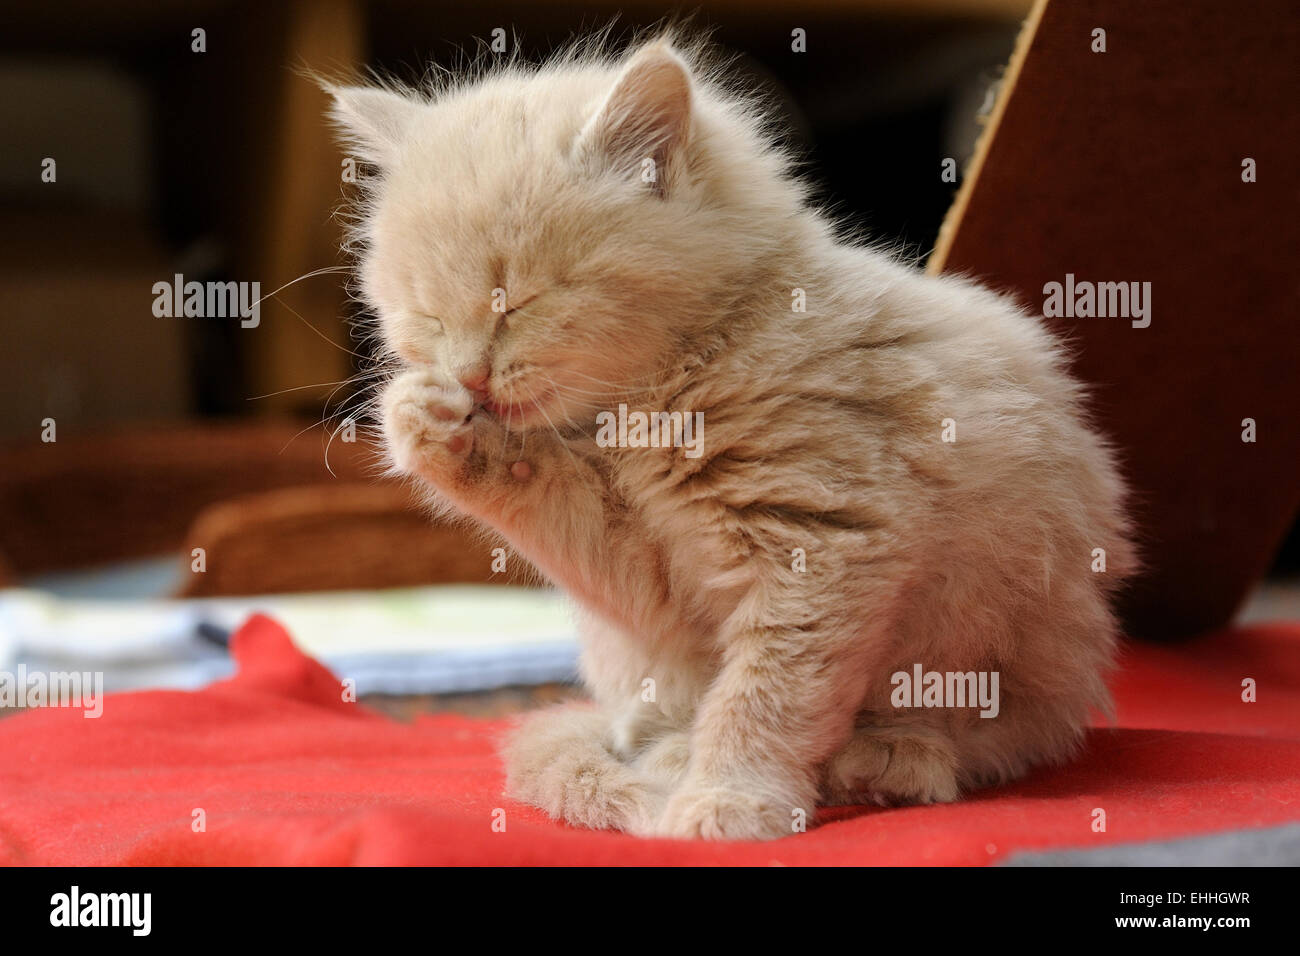 baby cat Stock Photo